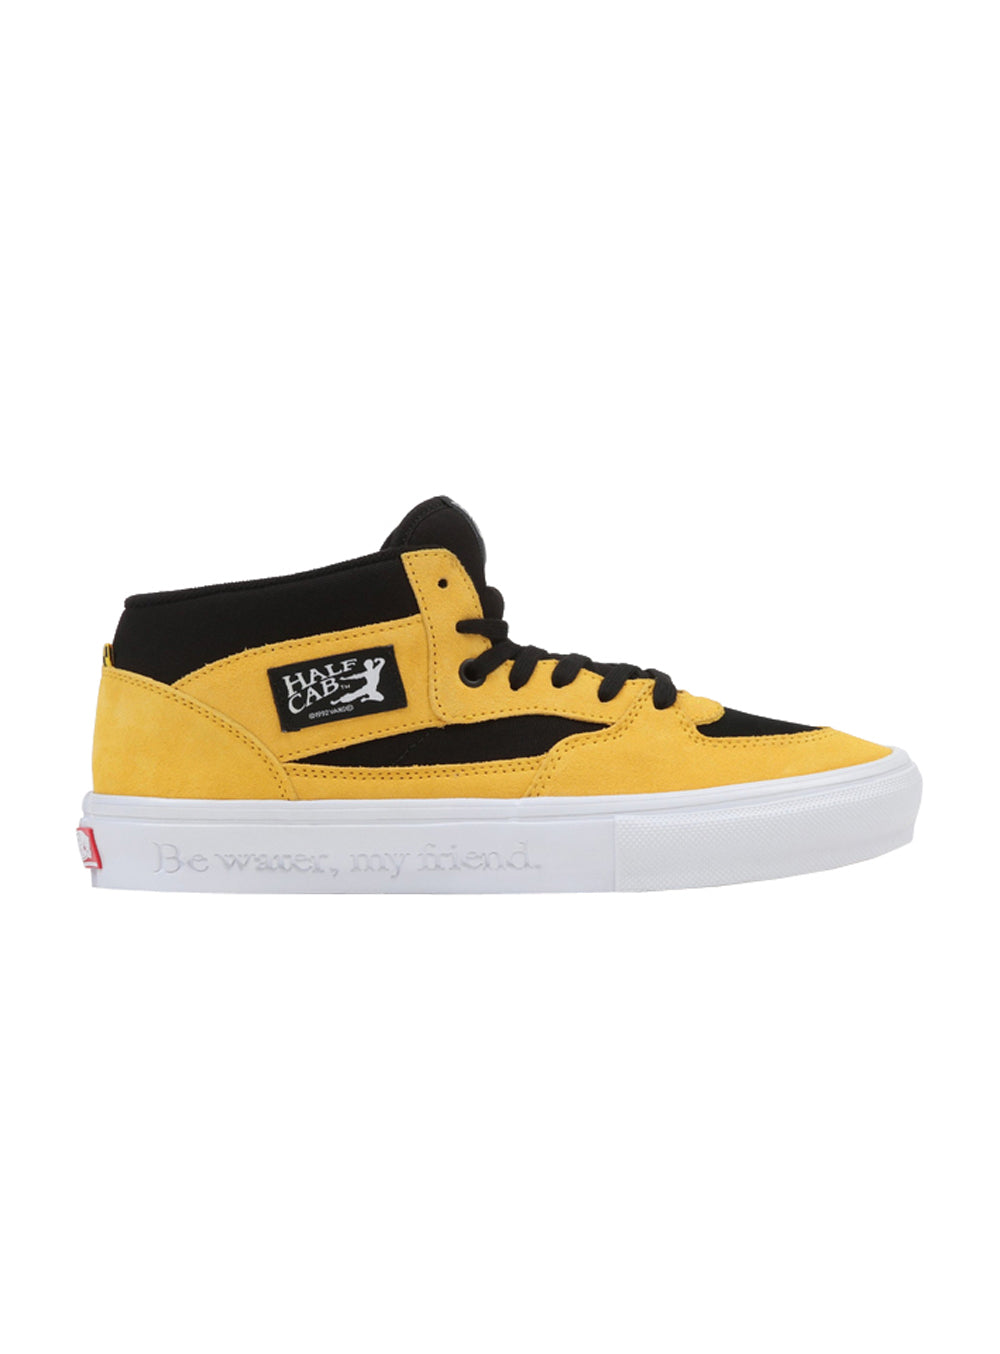 Vans Skate Half Cab Bruce Lee Black/Yellow 11.5